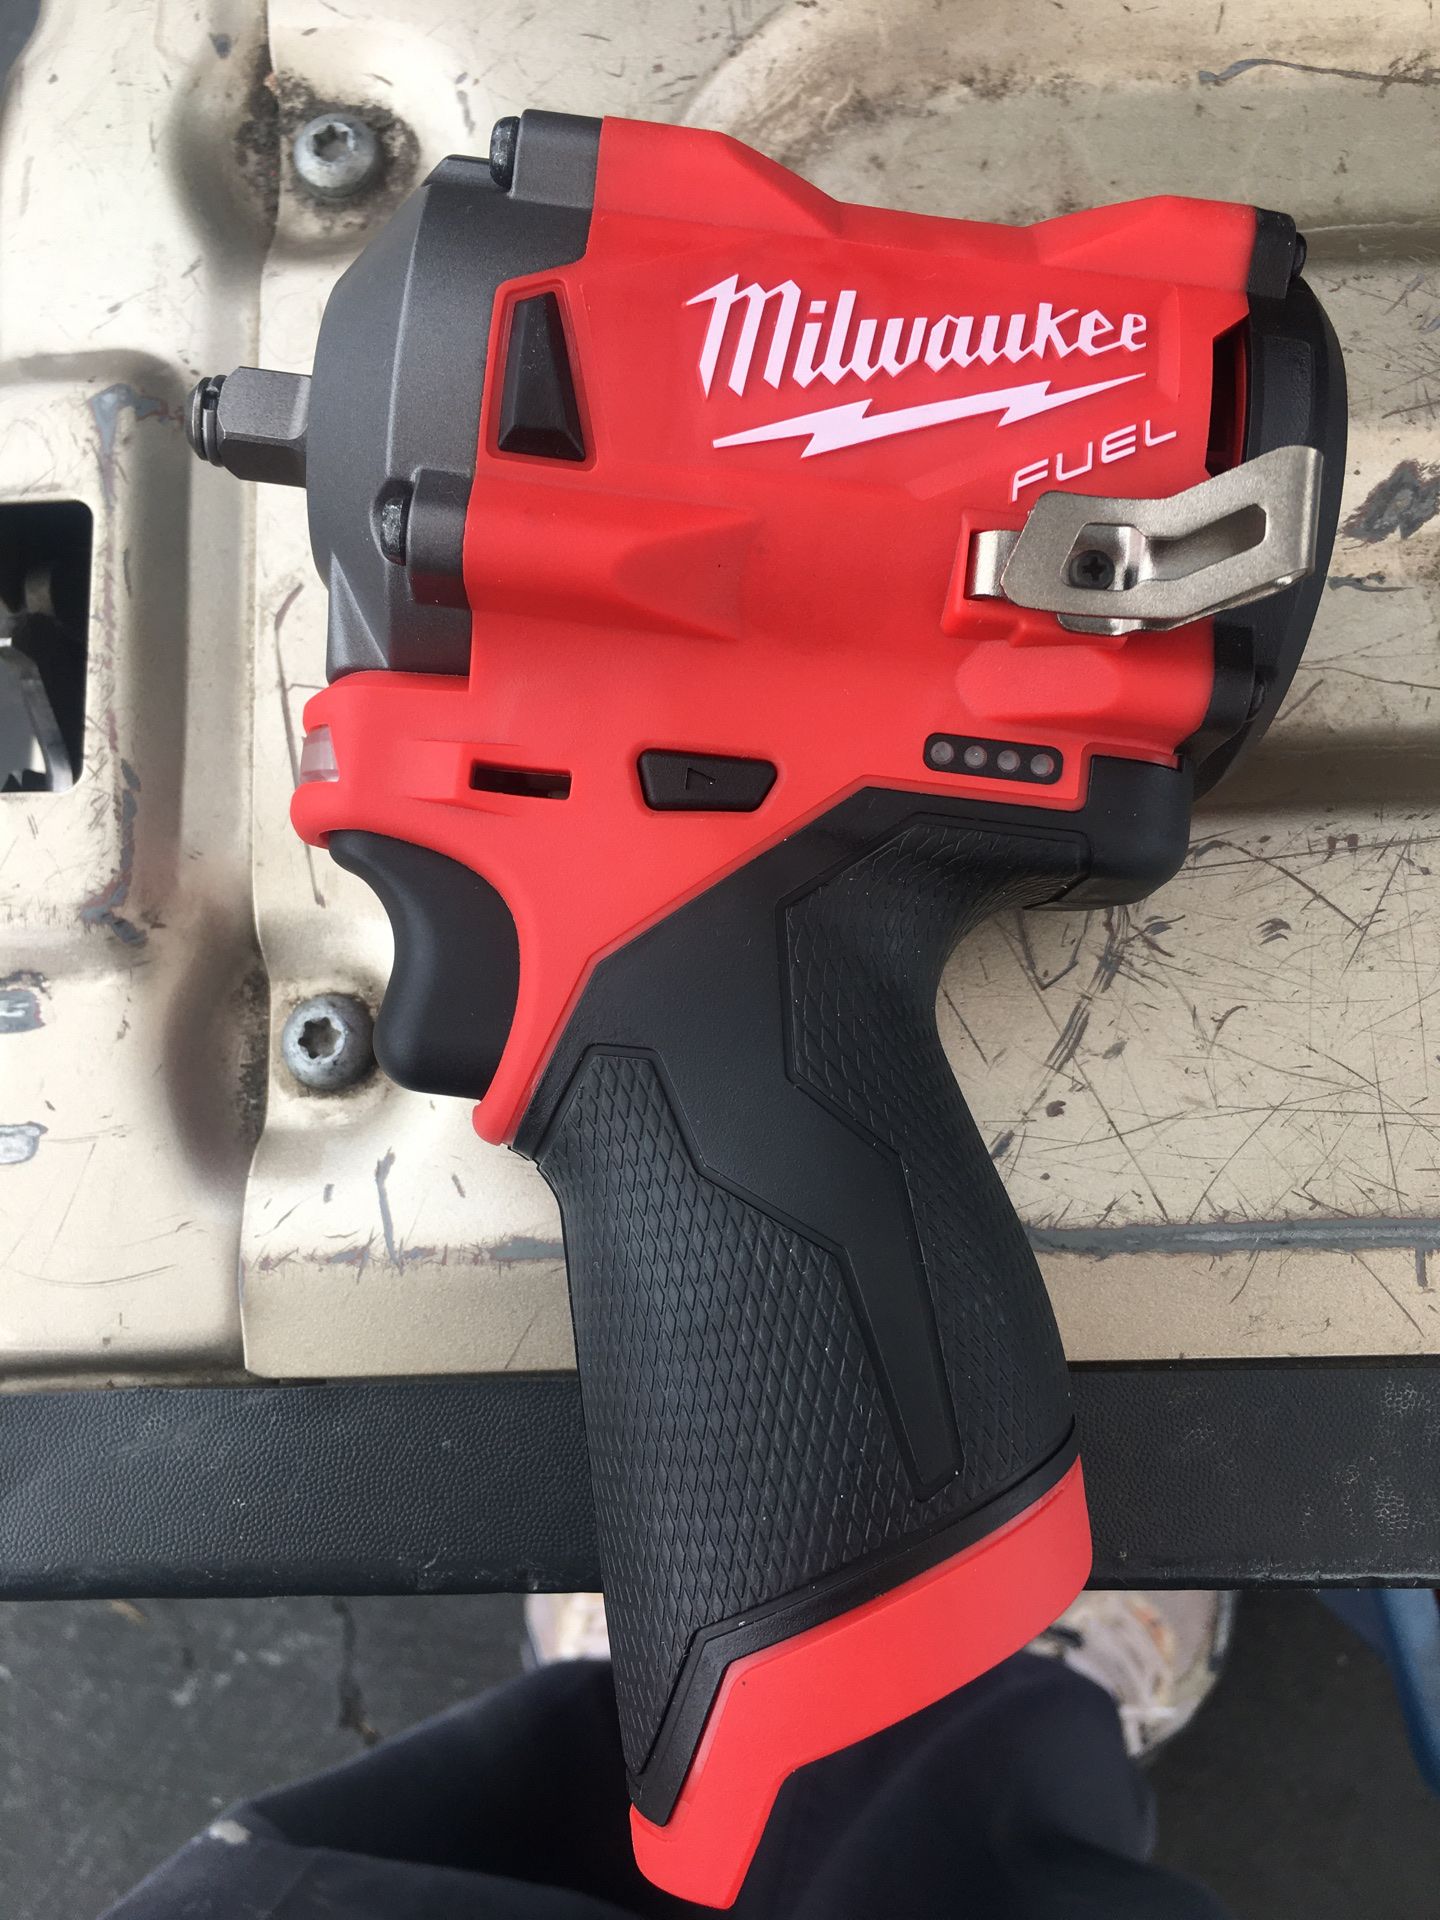 Milwaukee 3/8 impact wrench